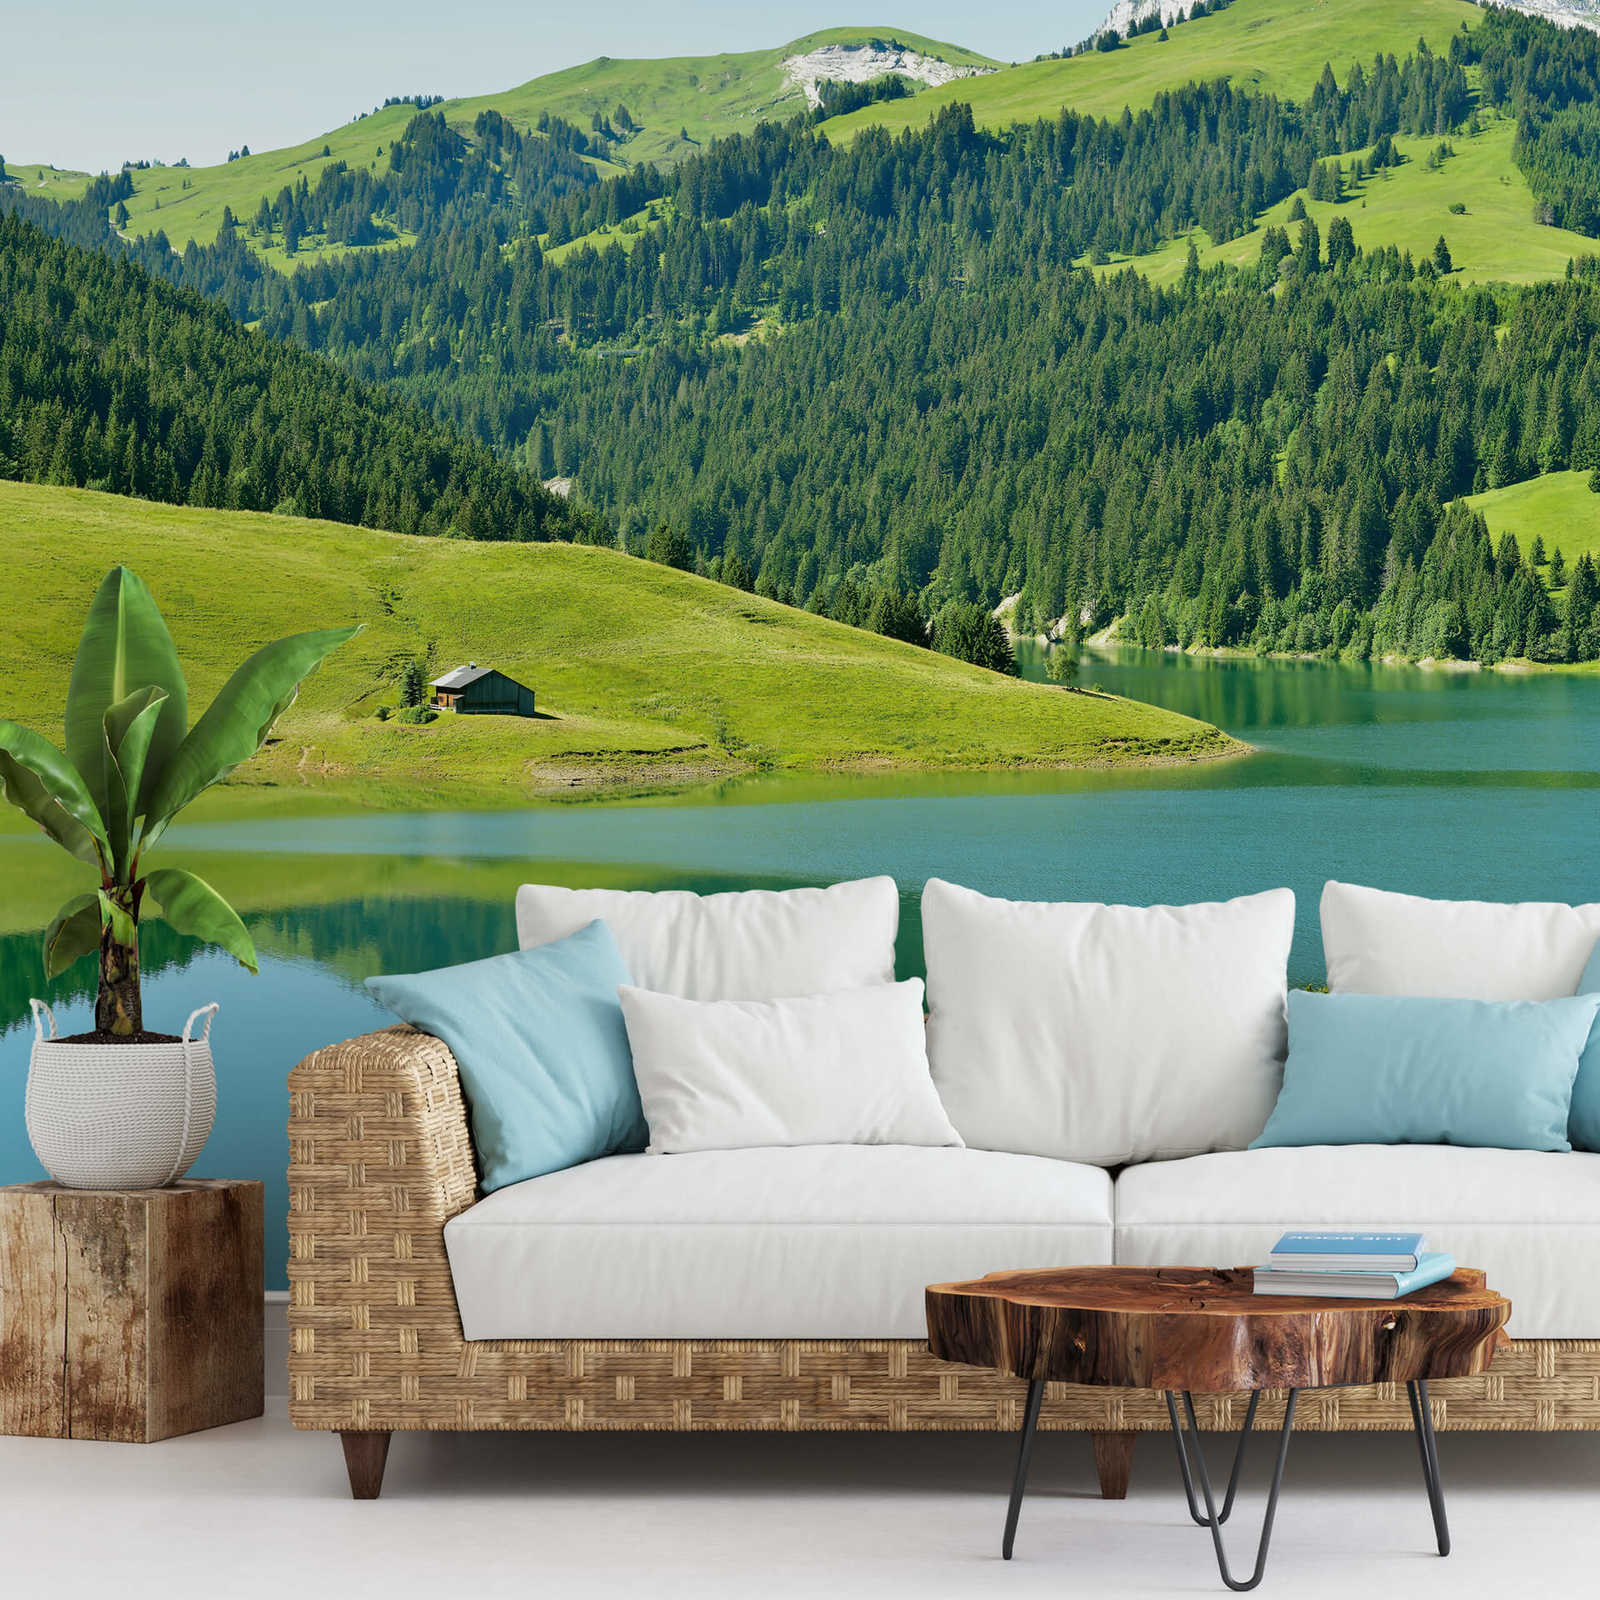             Fototapete Berg mit See in Schweiz – Grün, Blau, Grau
        